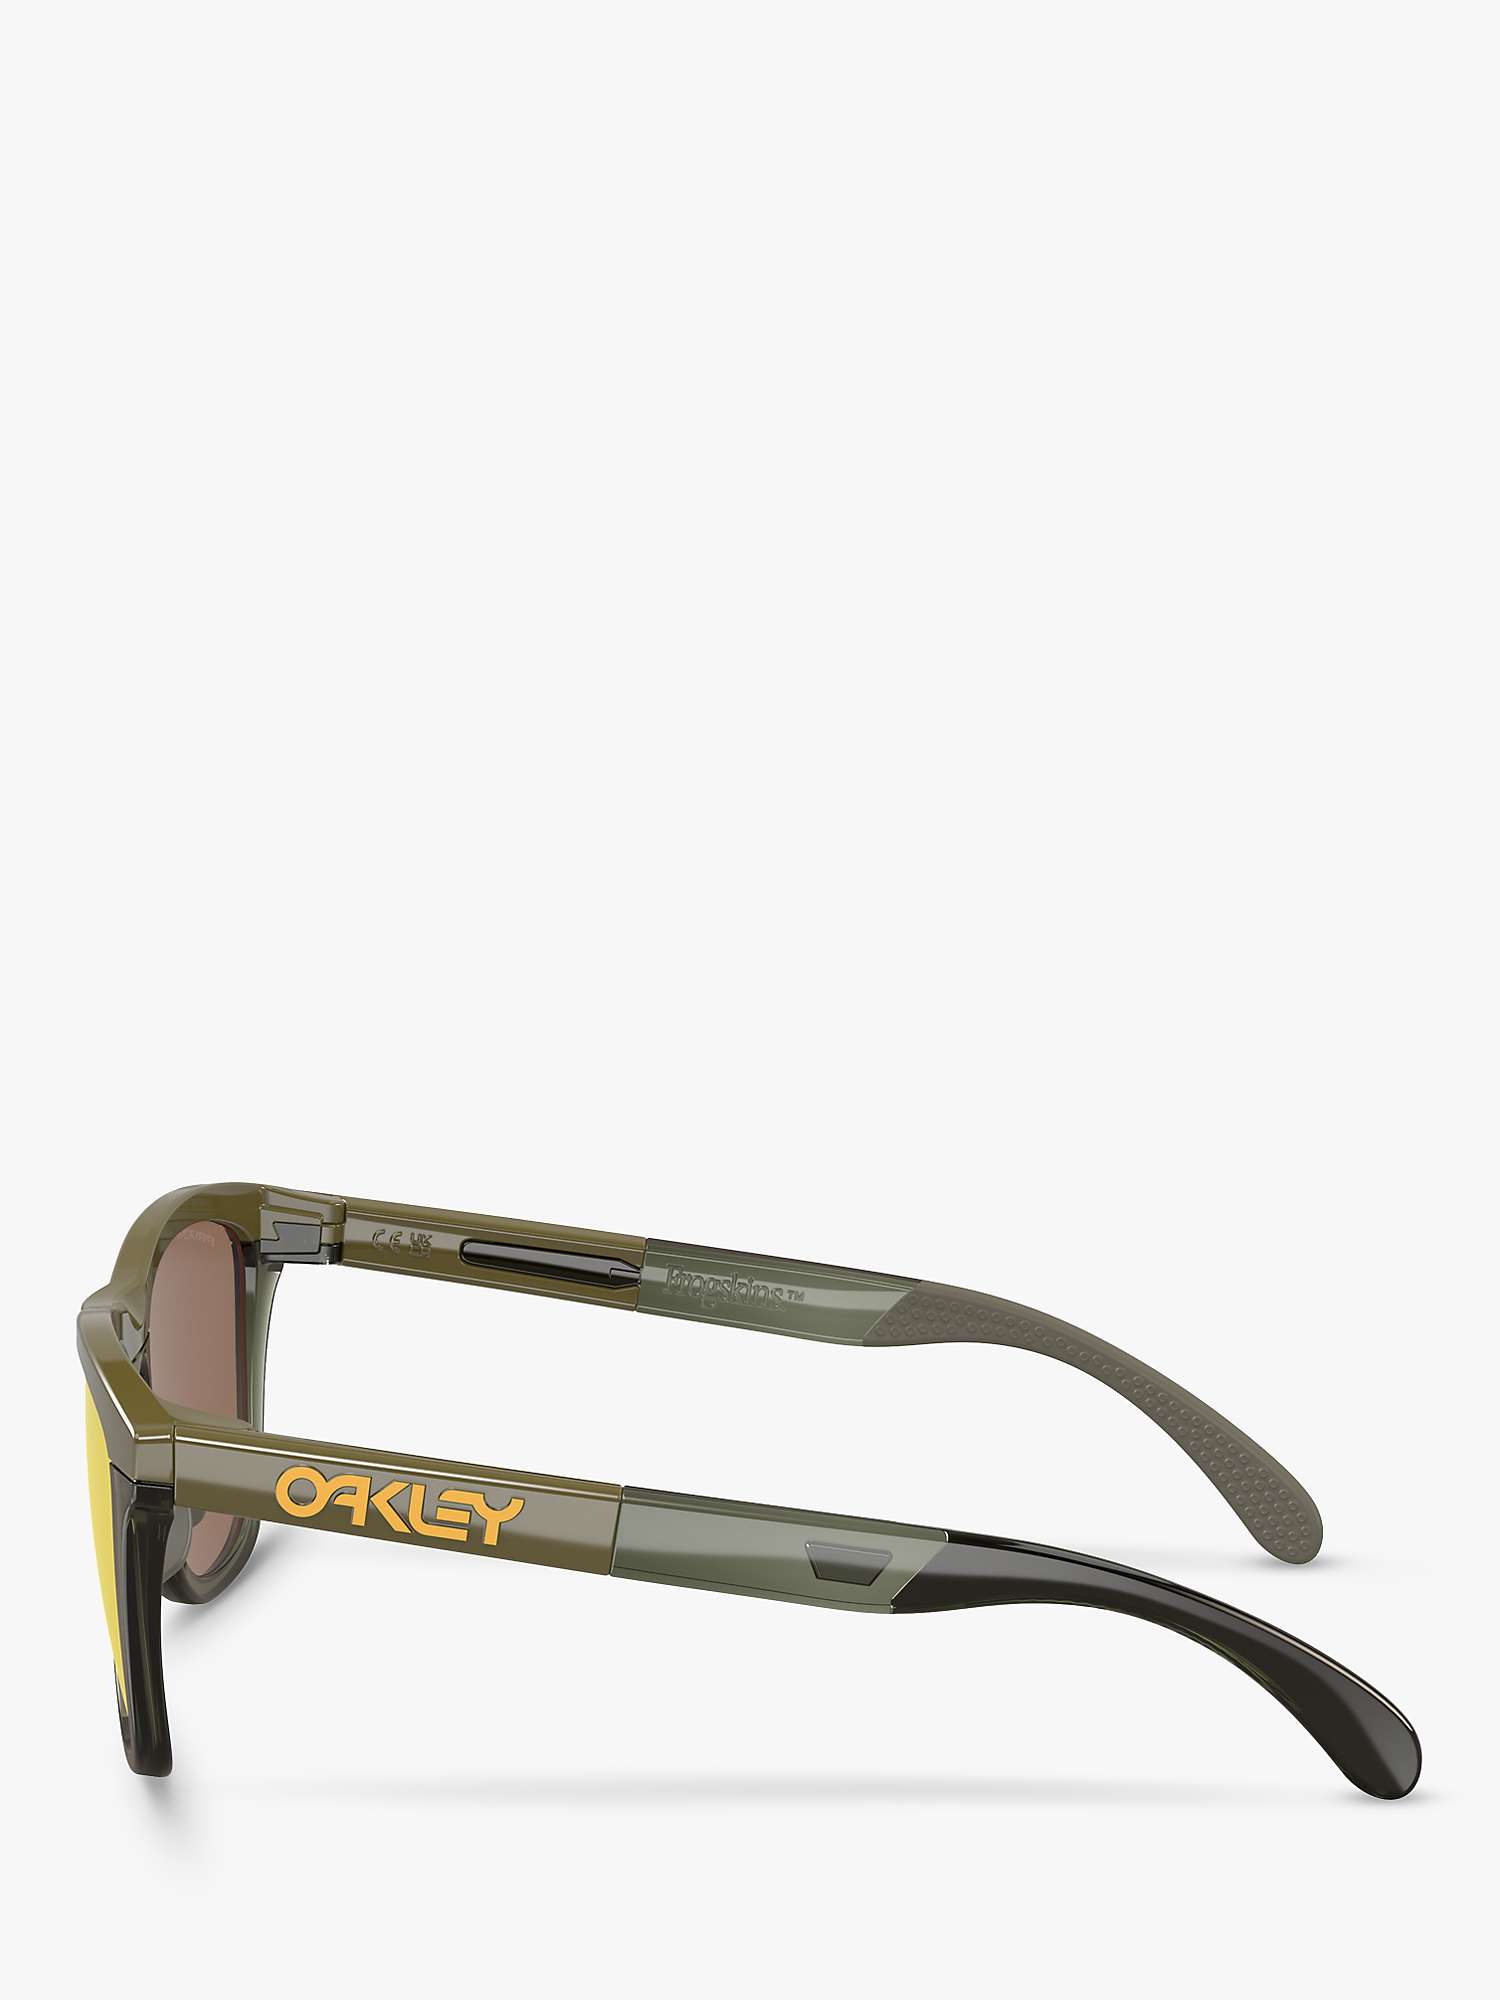 Buy Oakley OO9284 Men's Frogskins Sunglasses, Olive Ink/Dark Brush Online at johnlewis.com